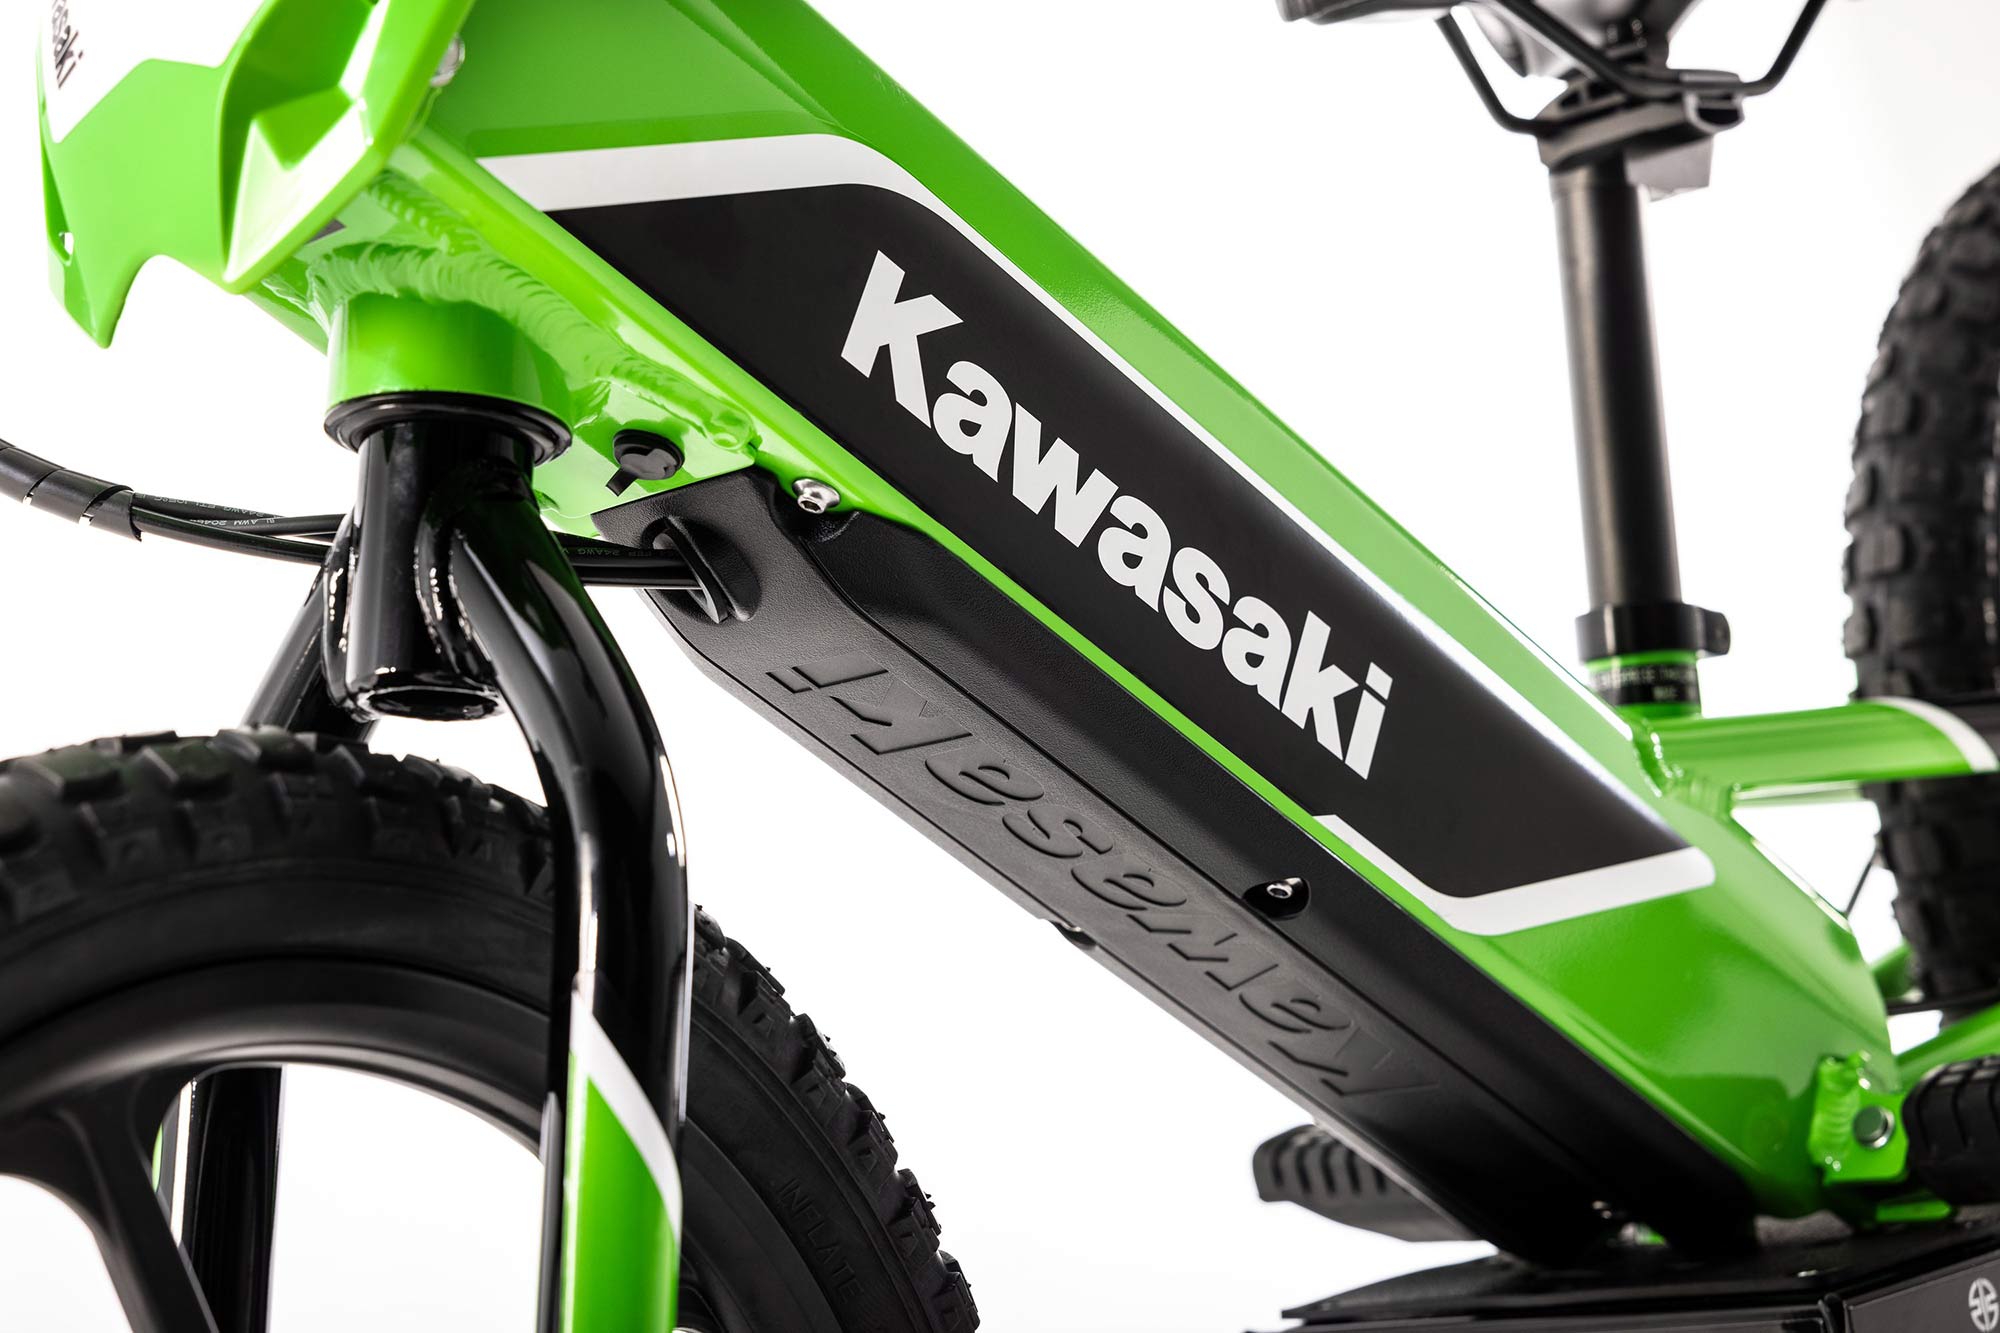 2023 Kawasaki Elektrode Electric Balance Bike First Look